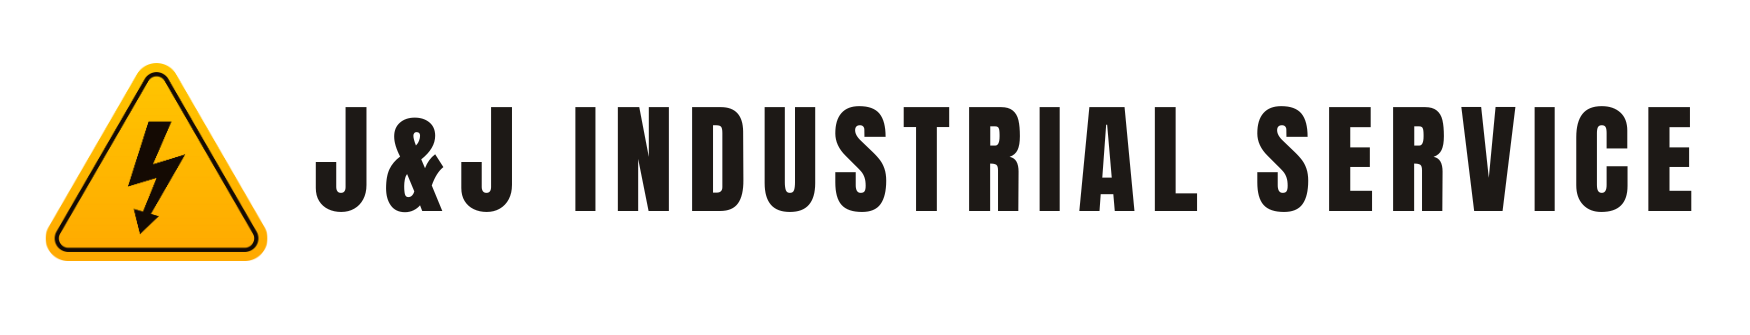 J&J Industrial Logo